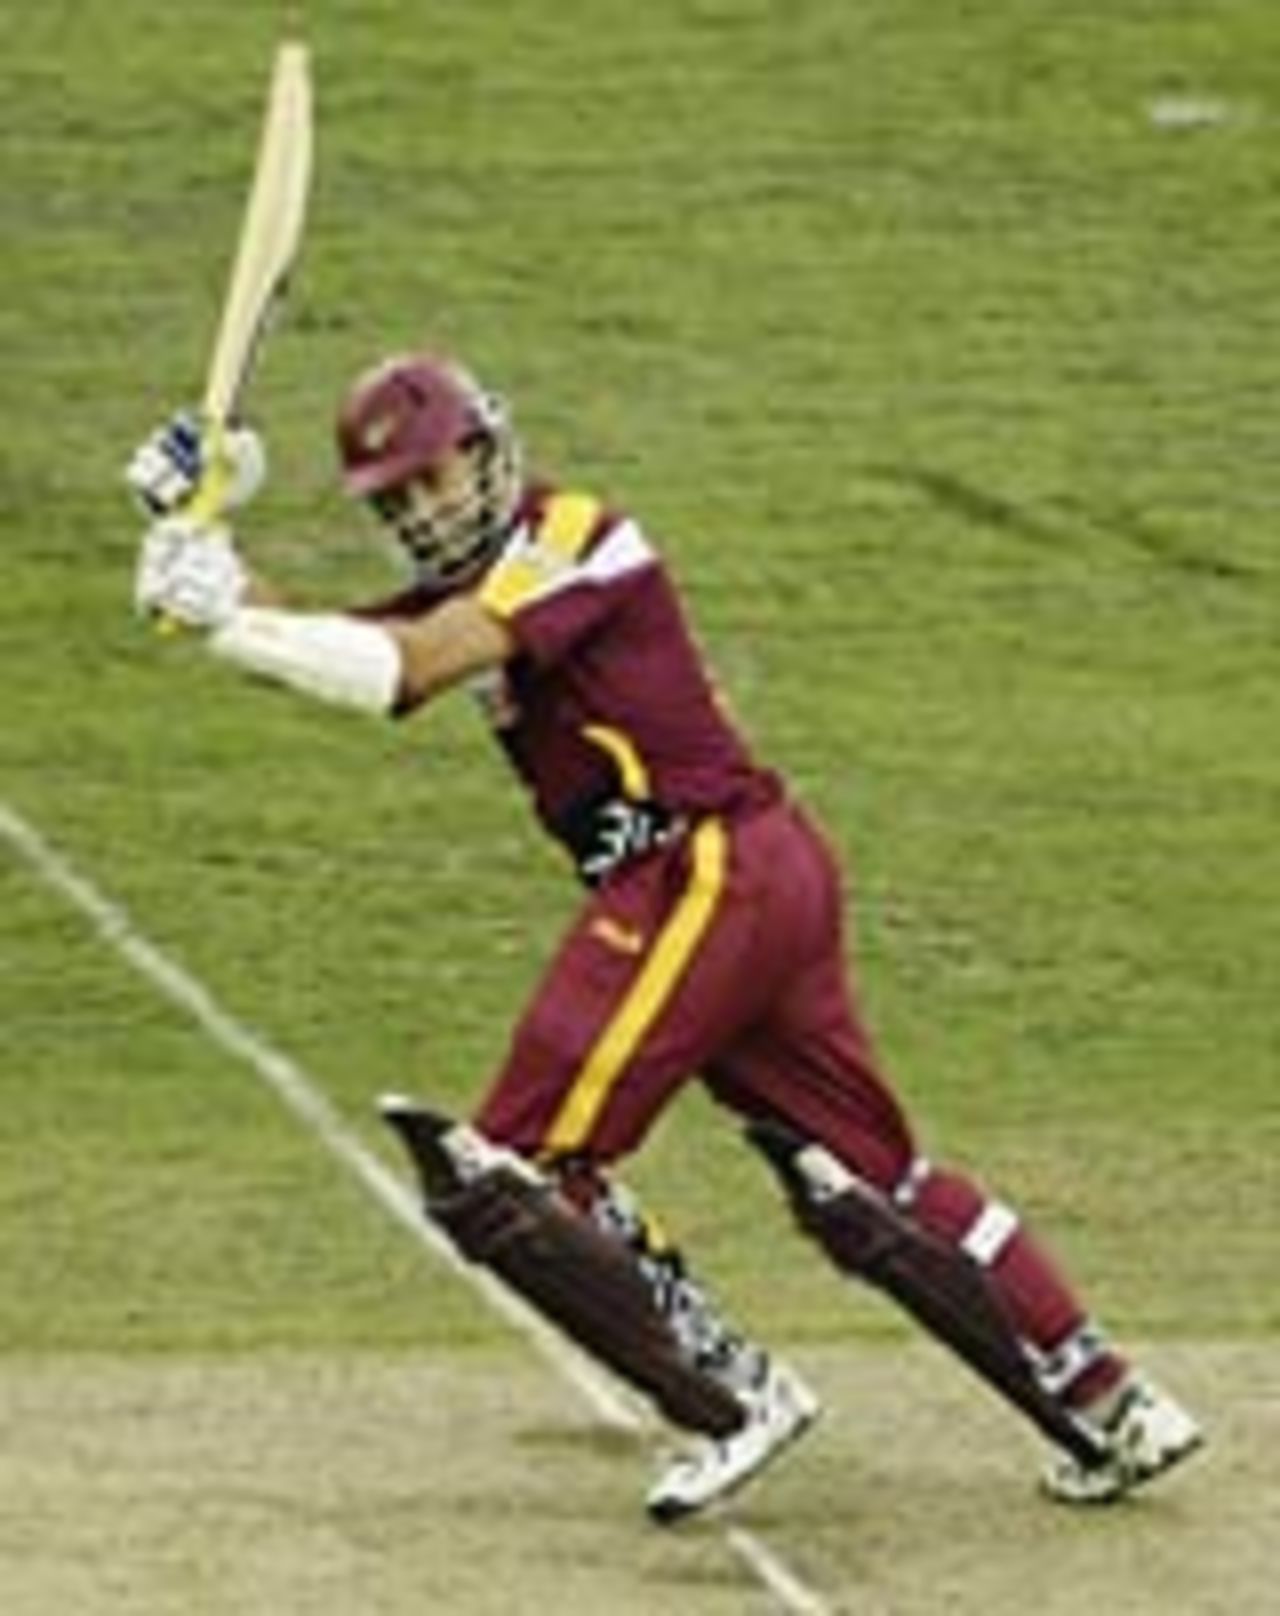 Stuart Law, Tasmania v Queensland, ING Cup, Hobart, January 26, 2004